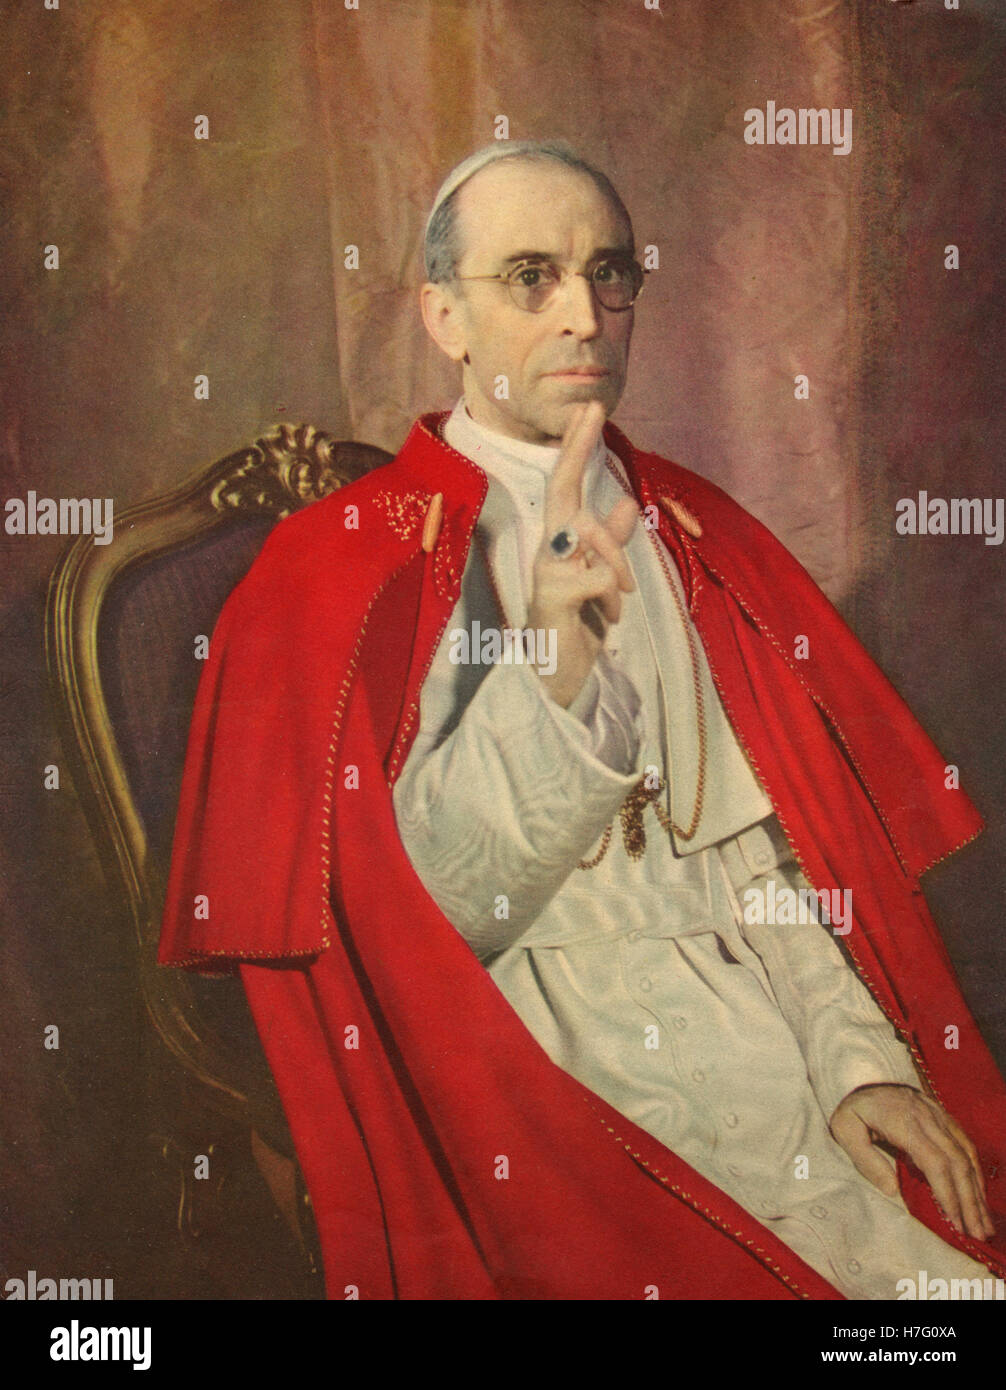 Portrait von Papst Pius XII Stockfoto